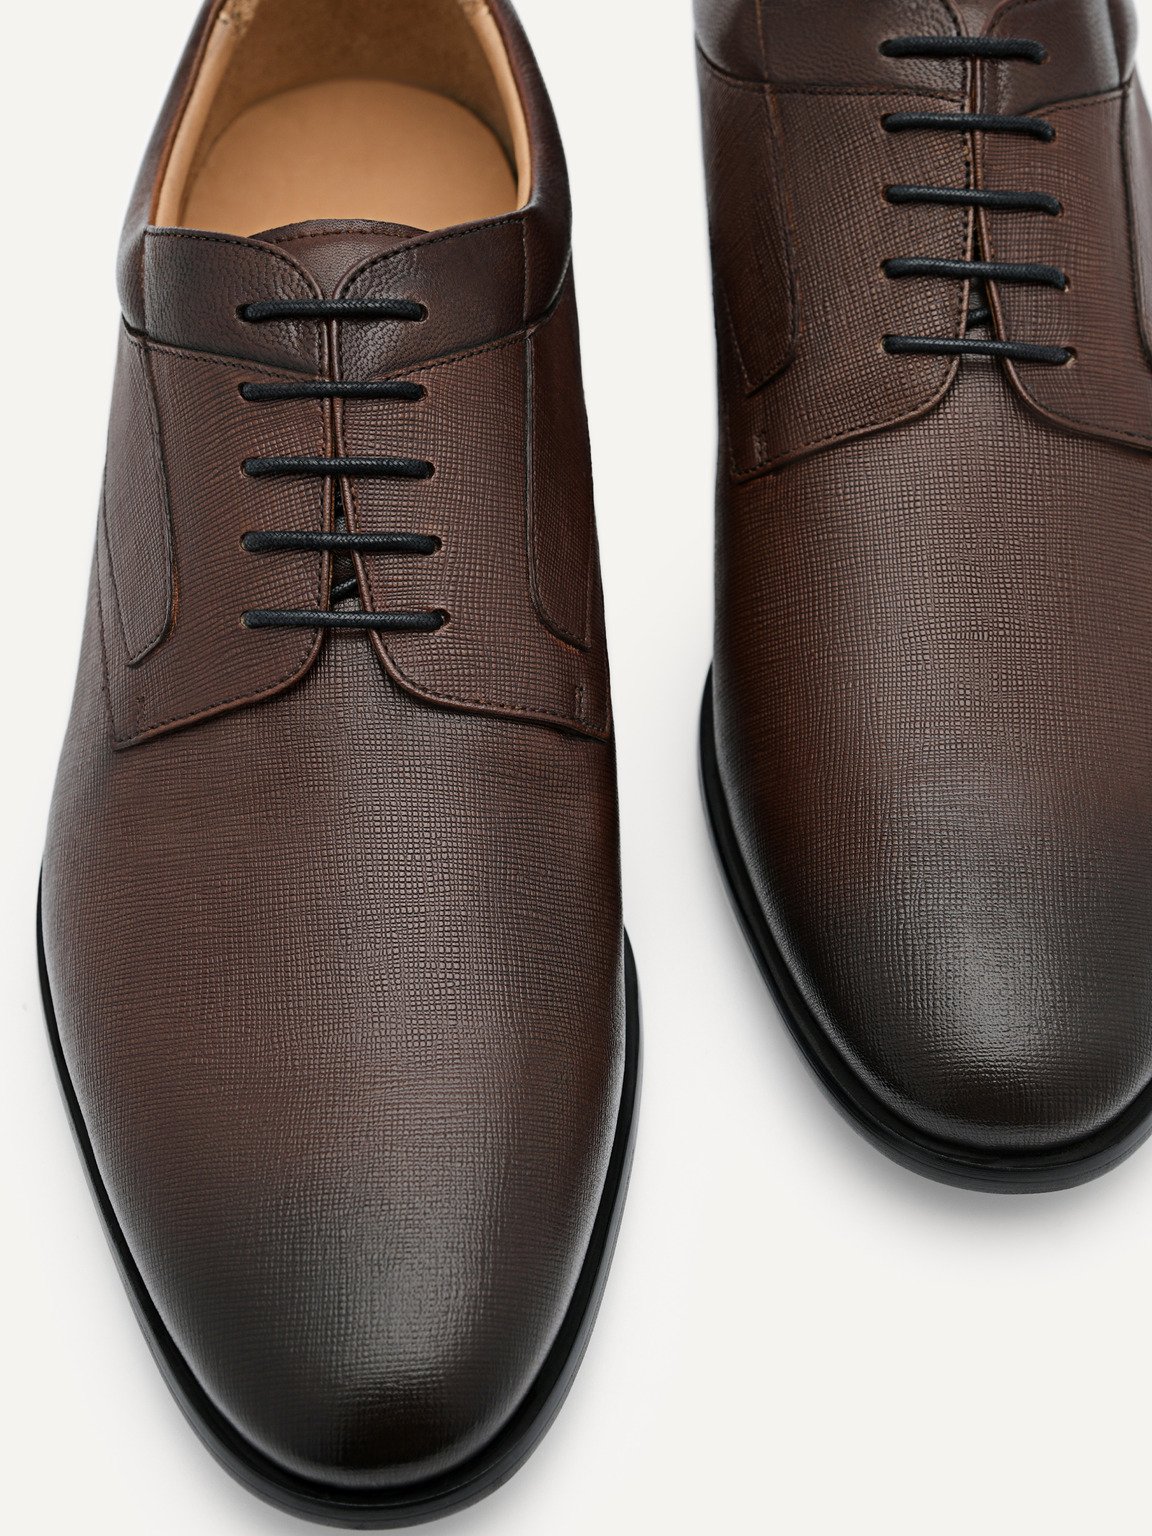 Embossed Leather Derby Shoes, Dark Brown